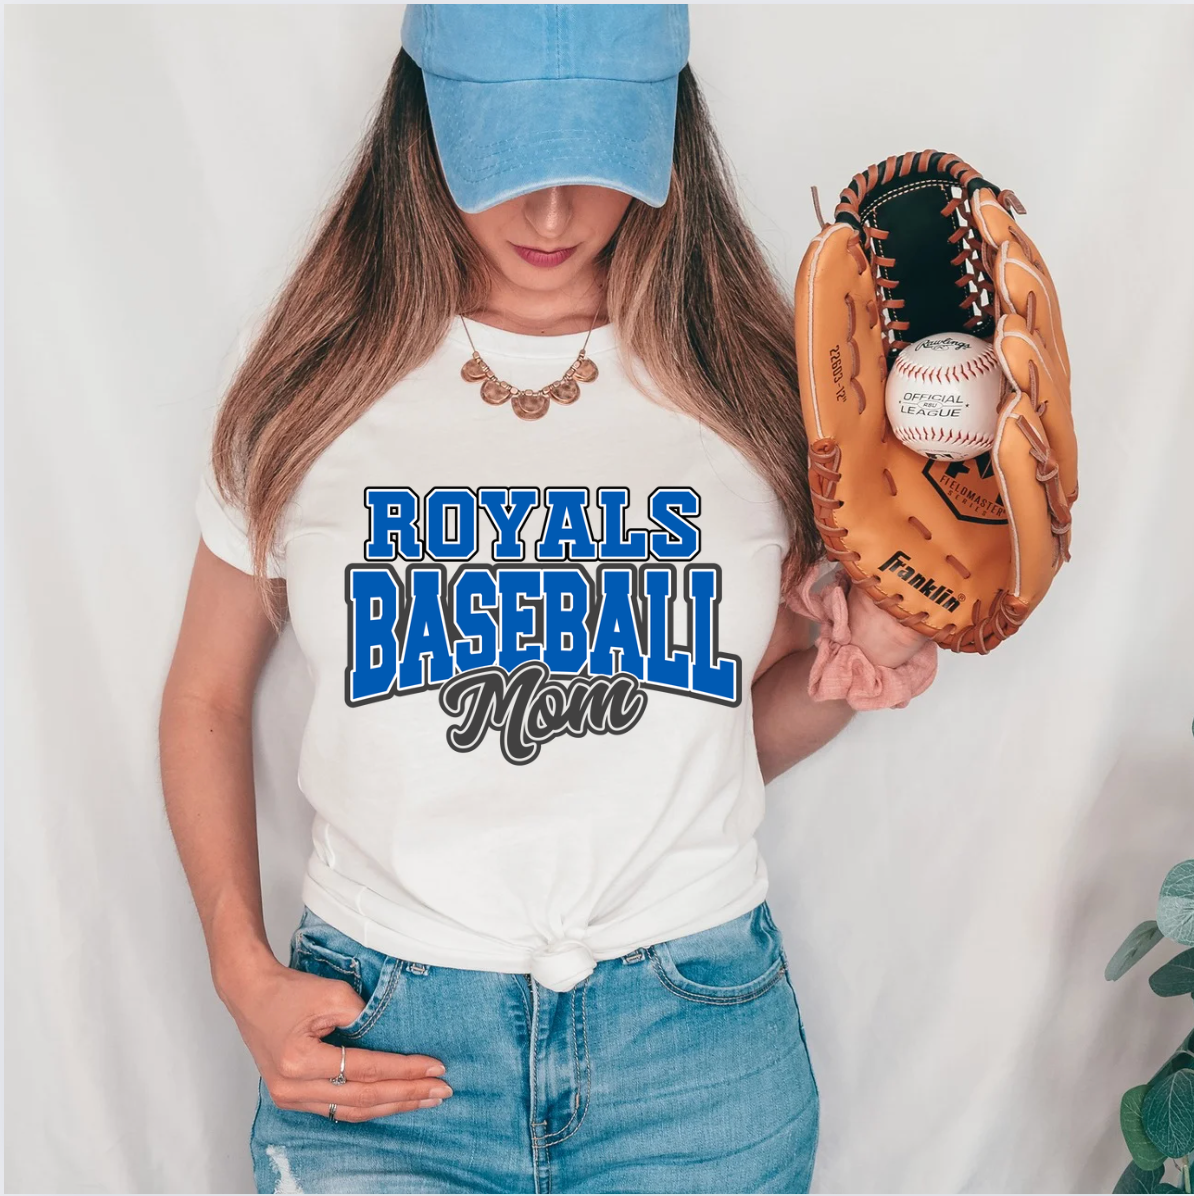 Royals Baseball Family - ALL available